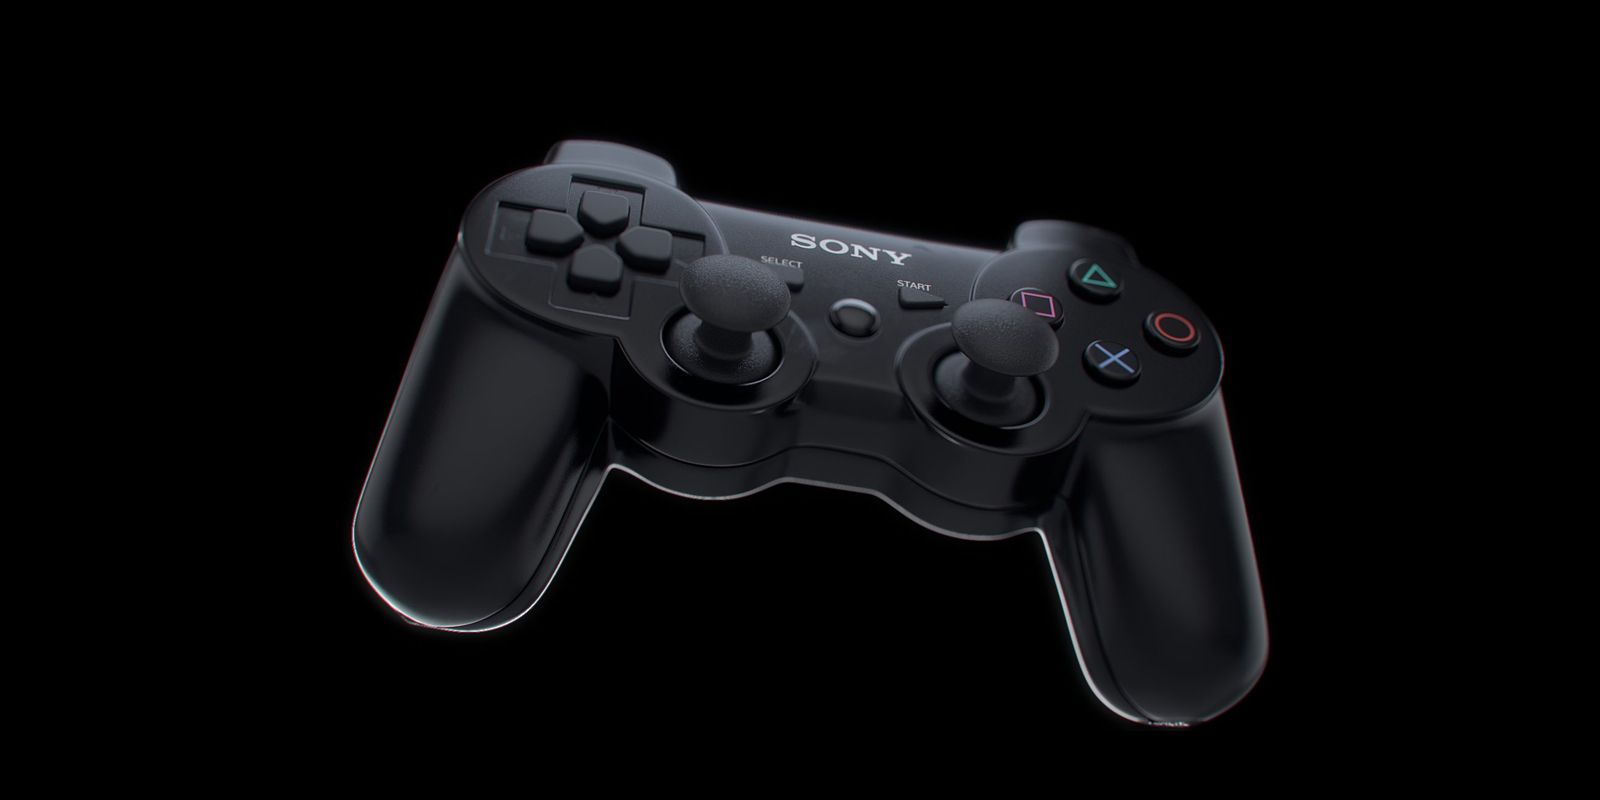 Playstation-DualShock-3-controller